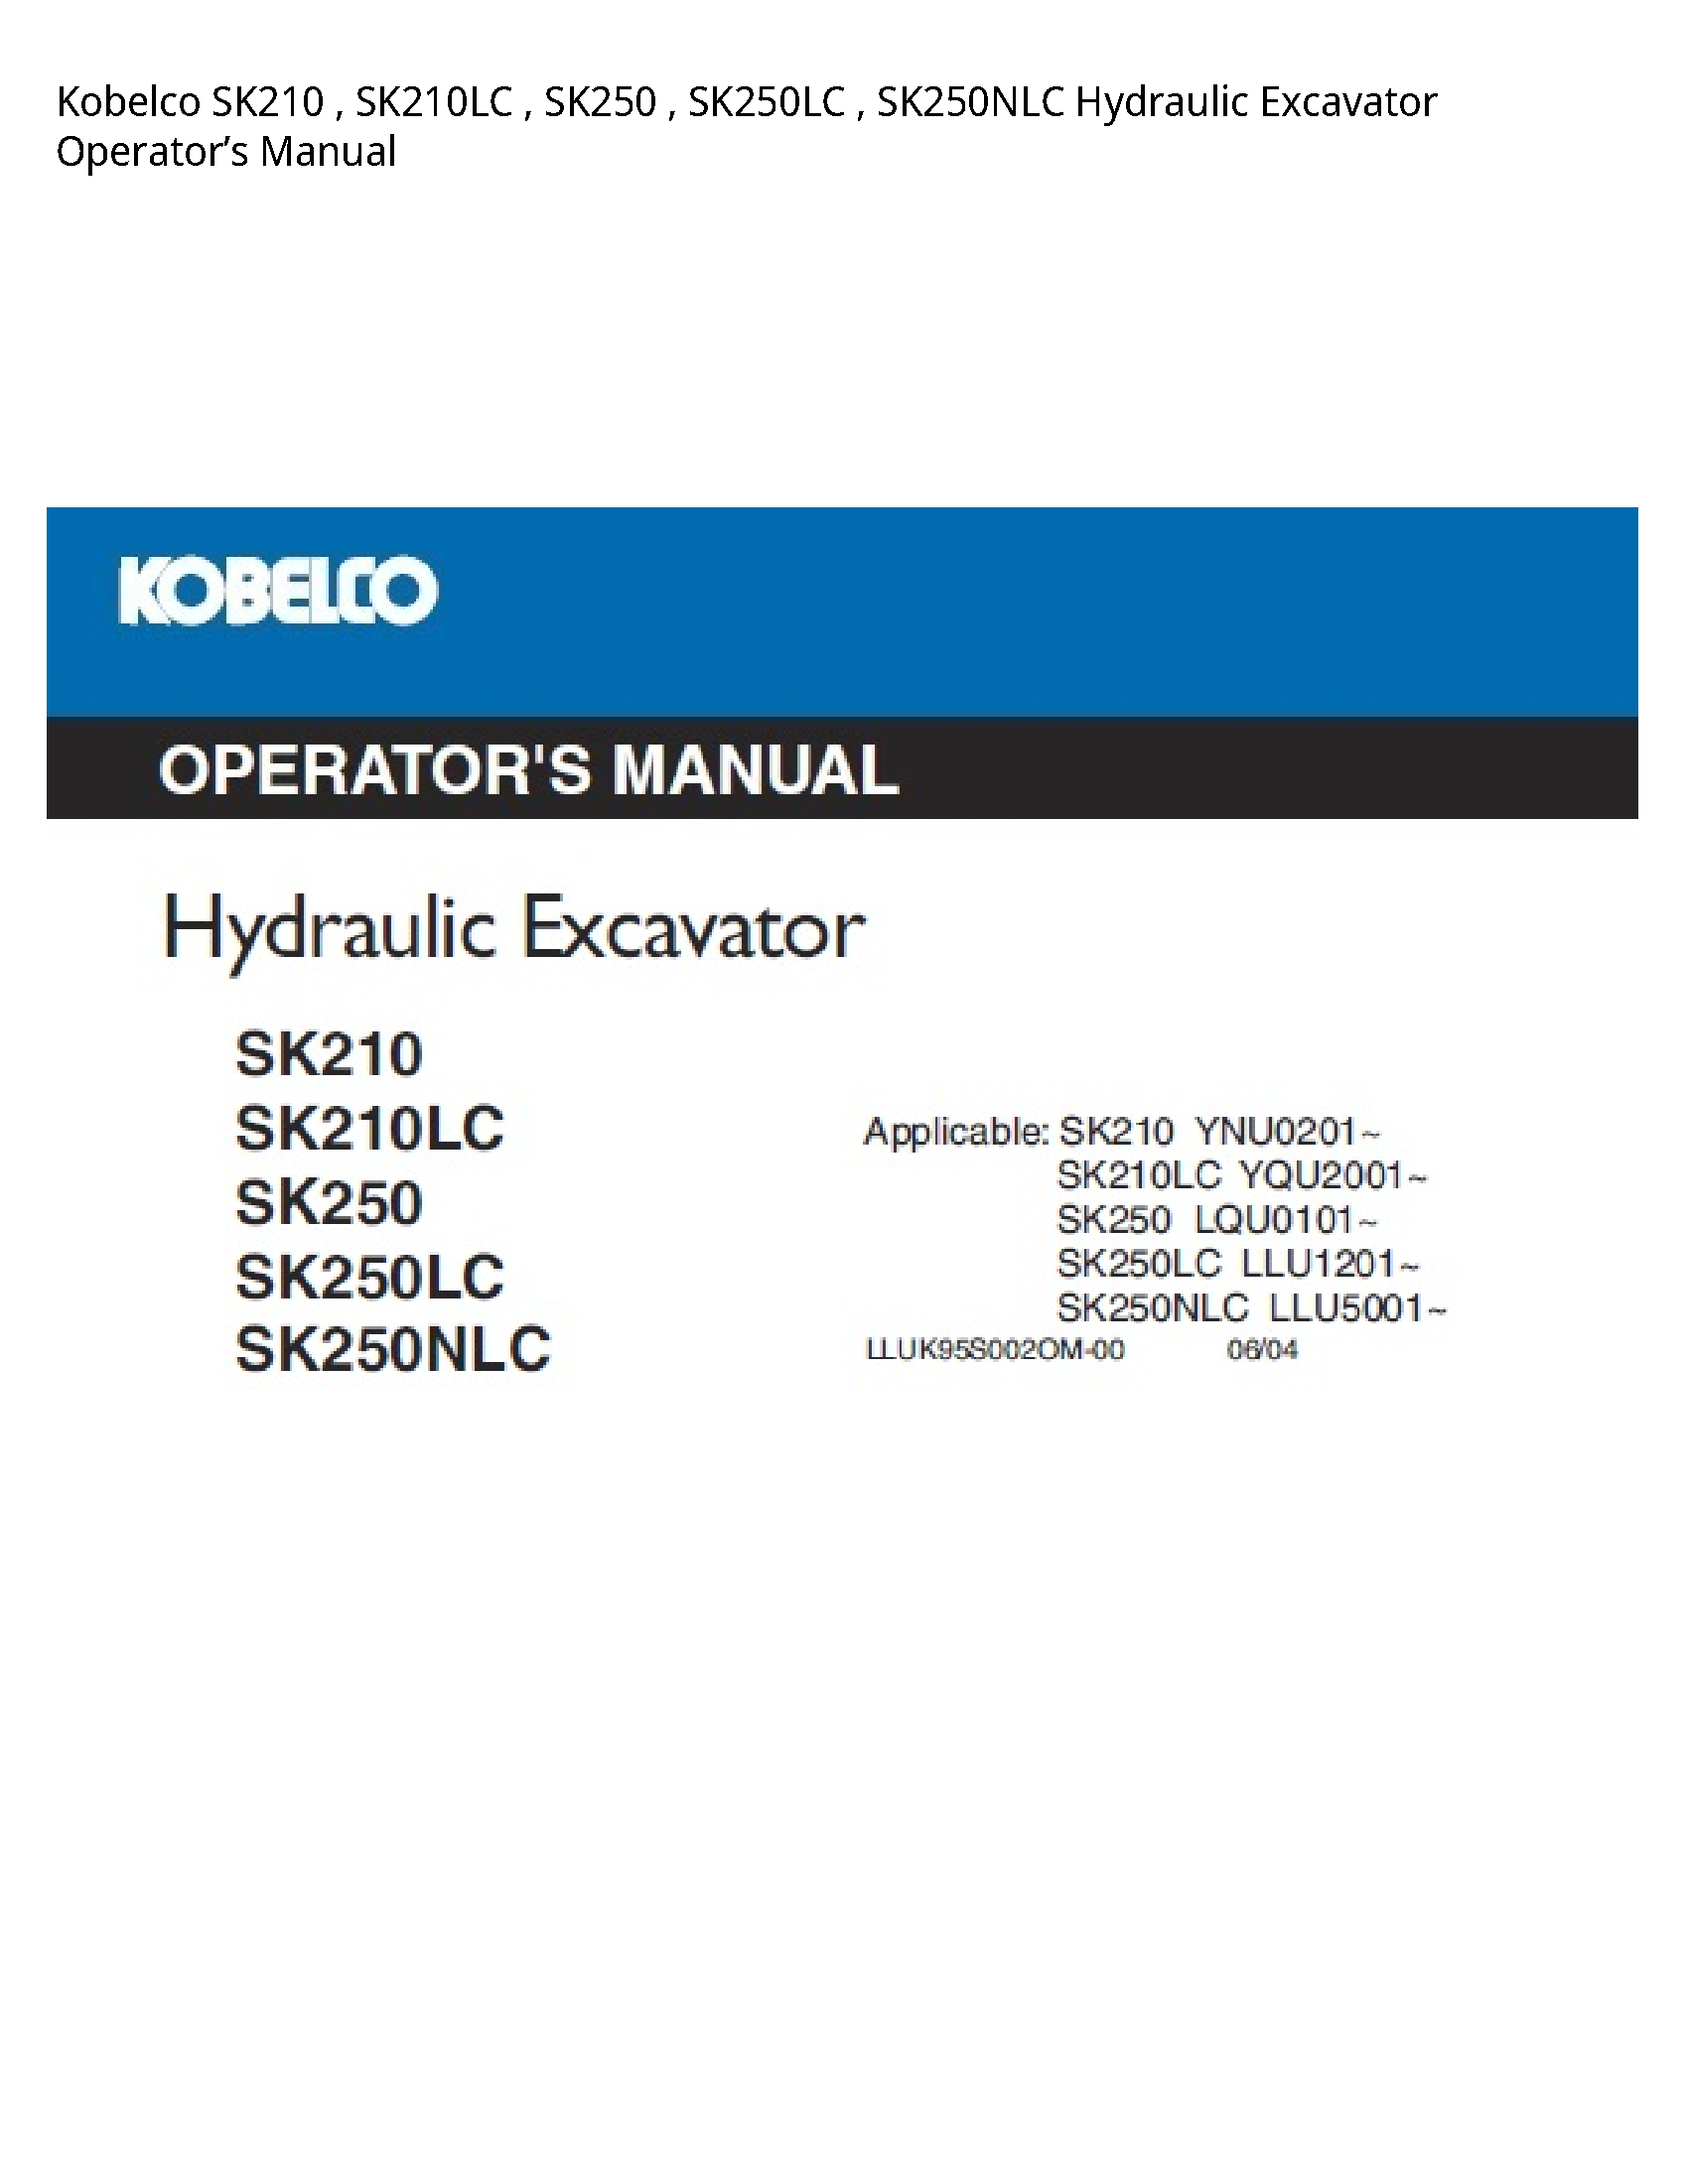 Kobelco SK210 Hydraulic Excavator Operator’s manual